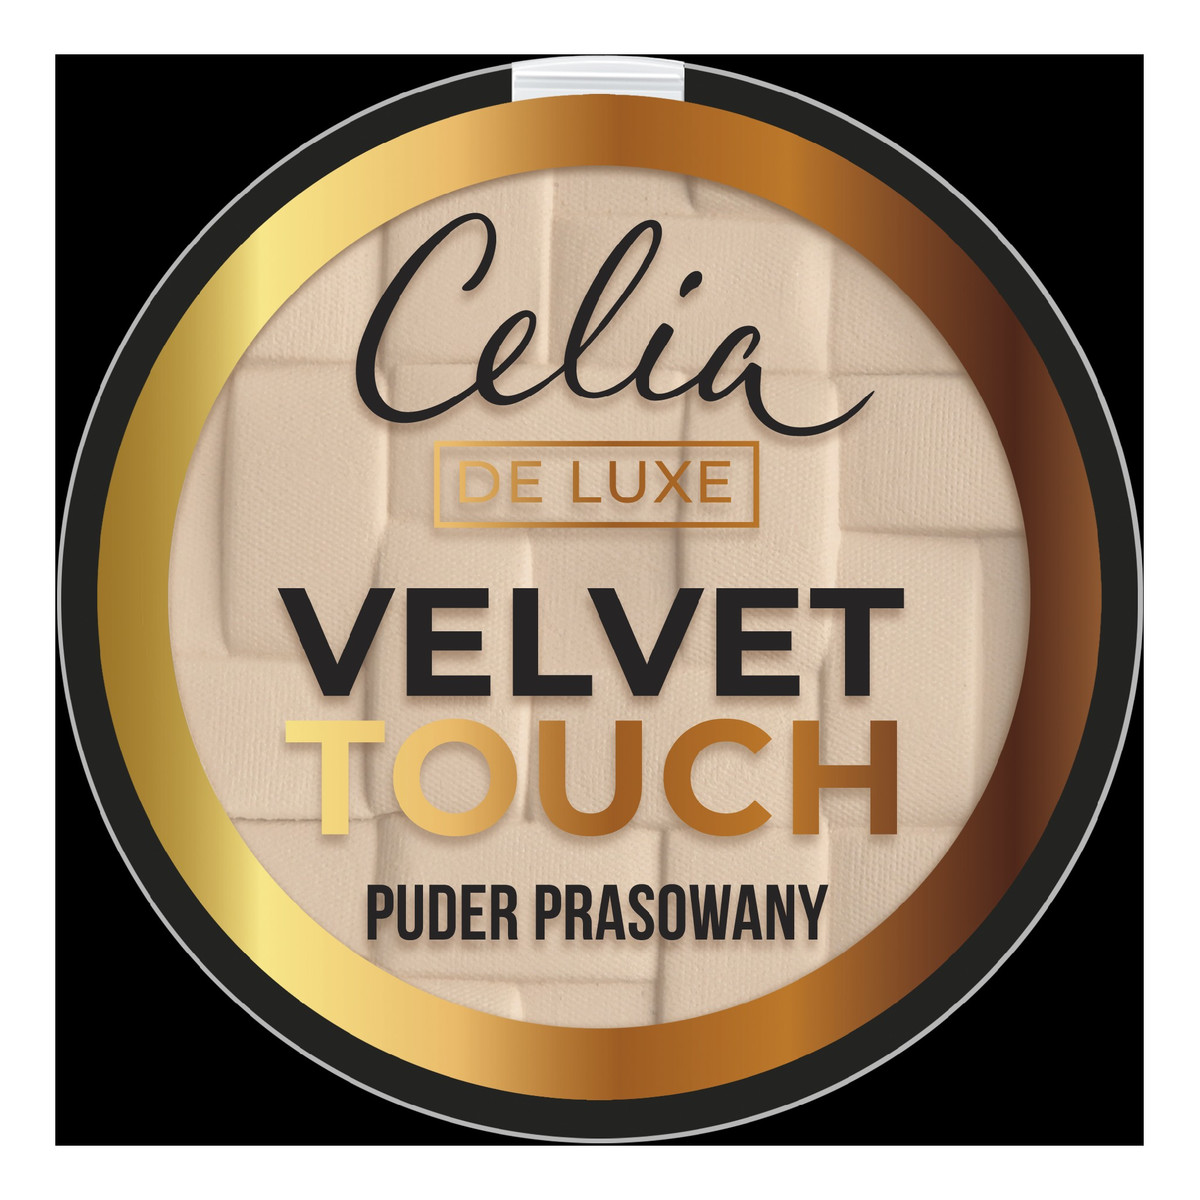 Celia Velvet Touch Puder brązujący 9g